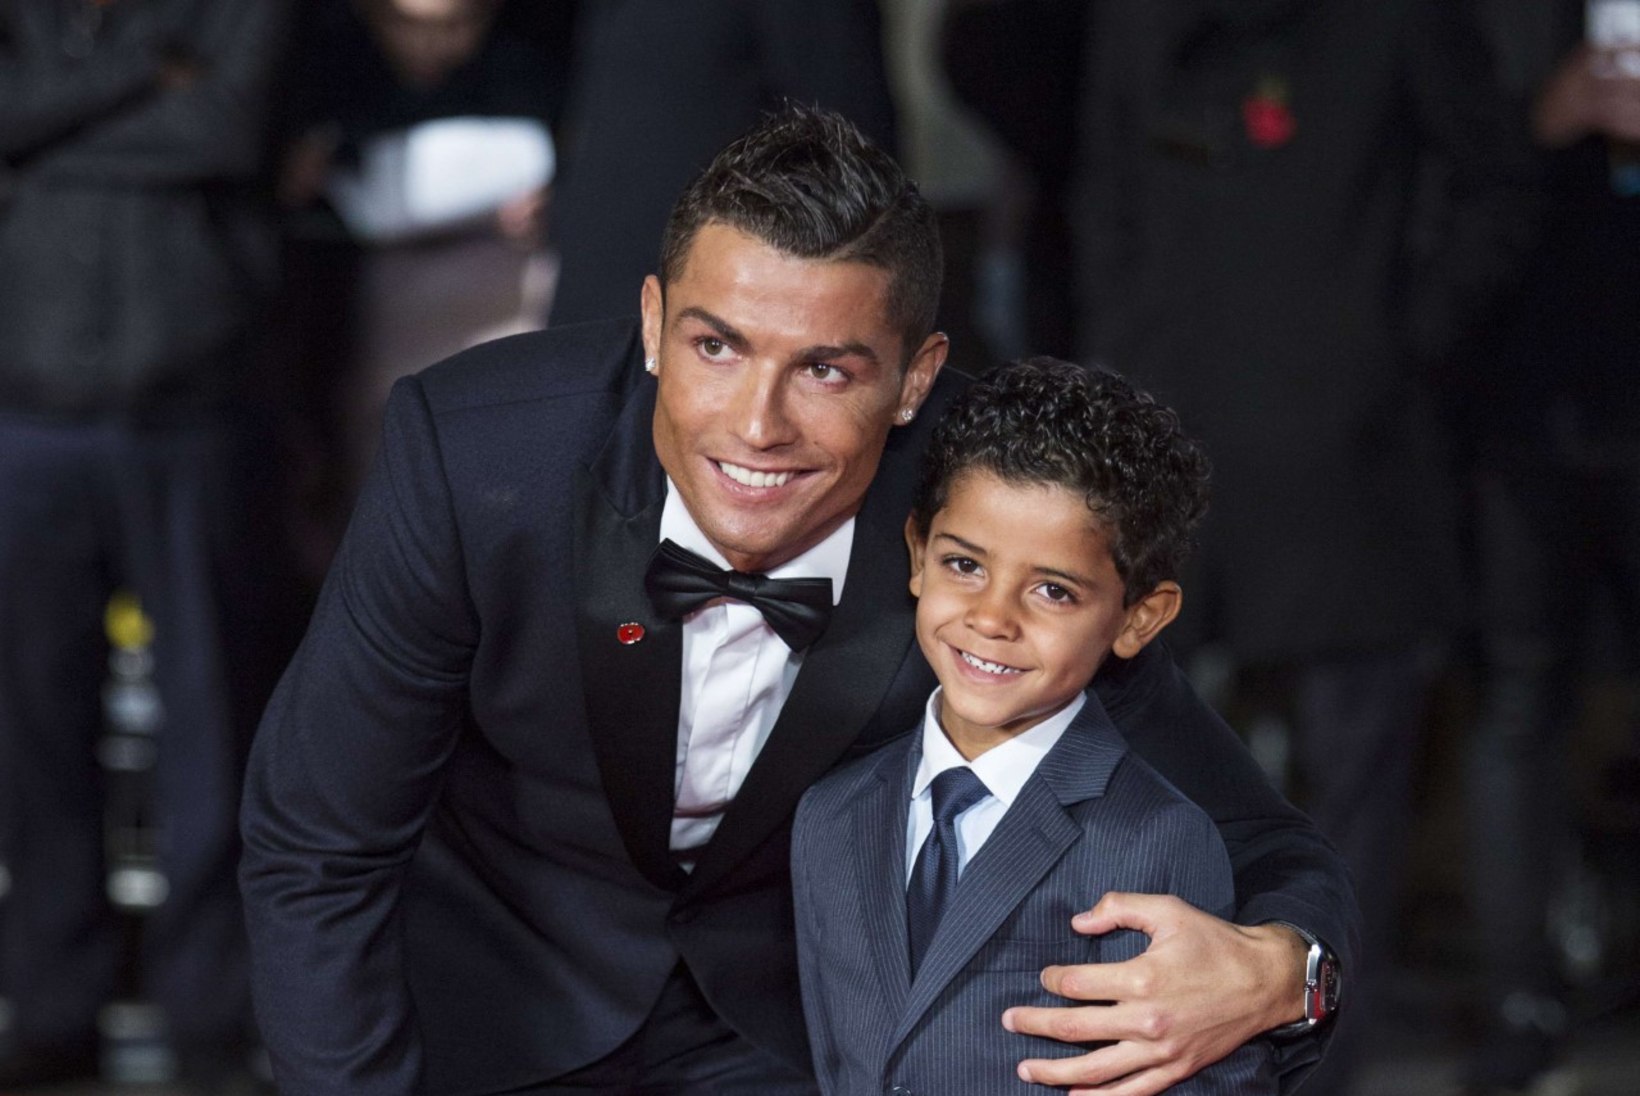 Cristiano Ronaldo avaldas oma poja kohta humoorikaid kilde 